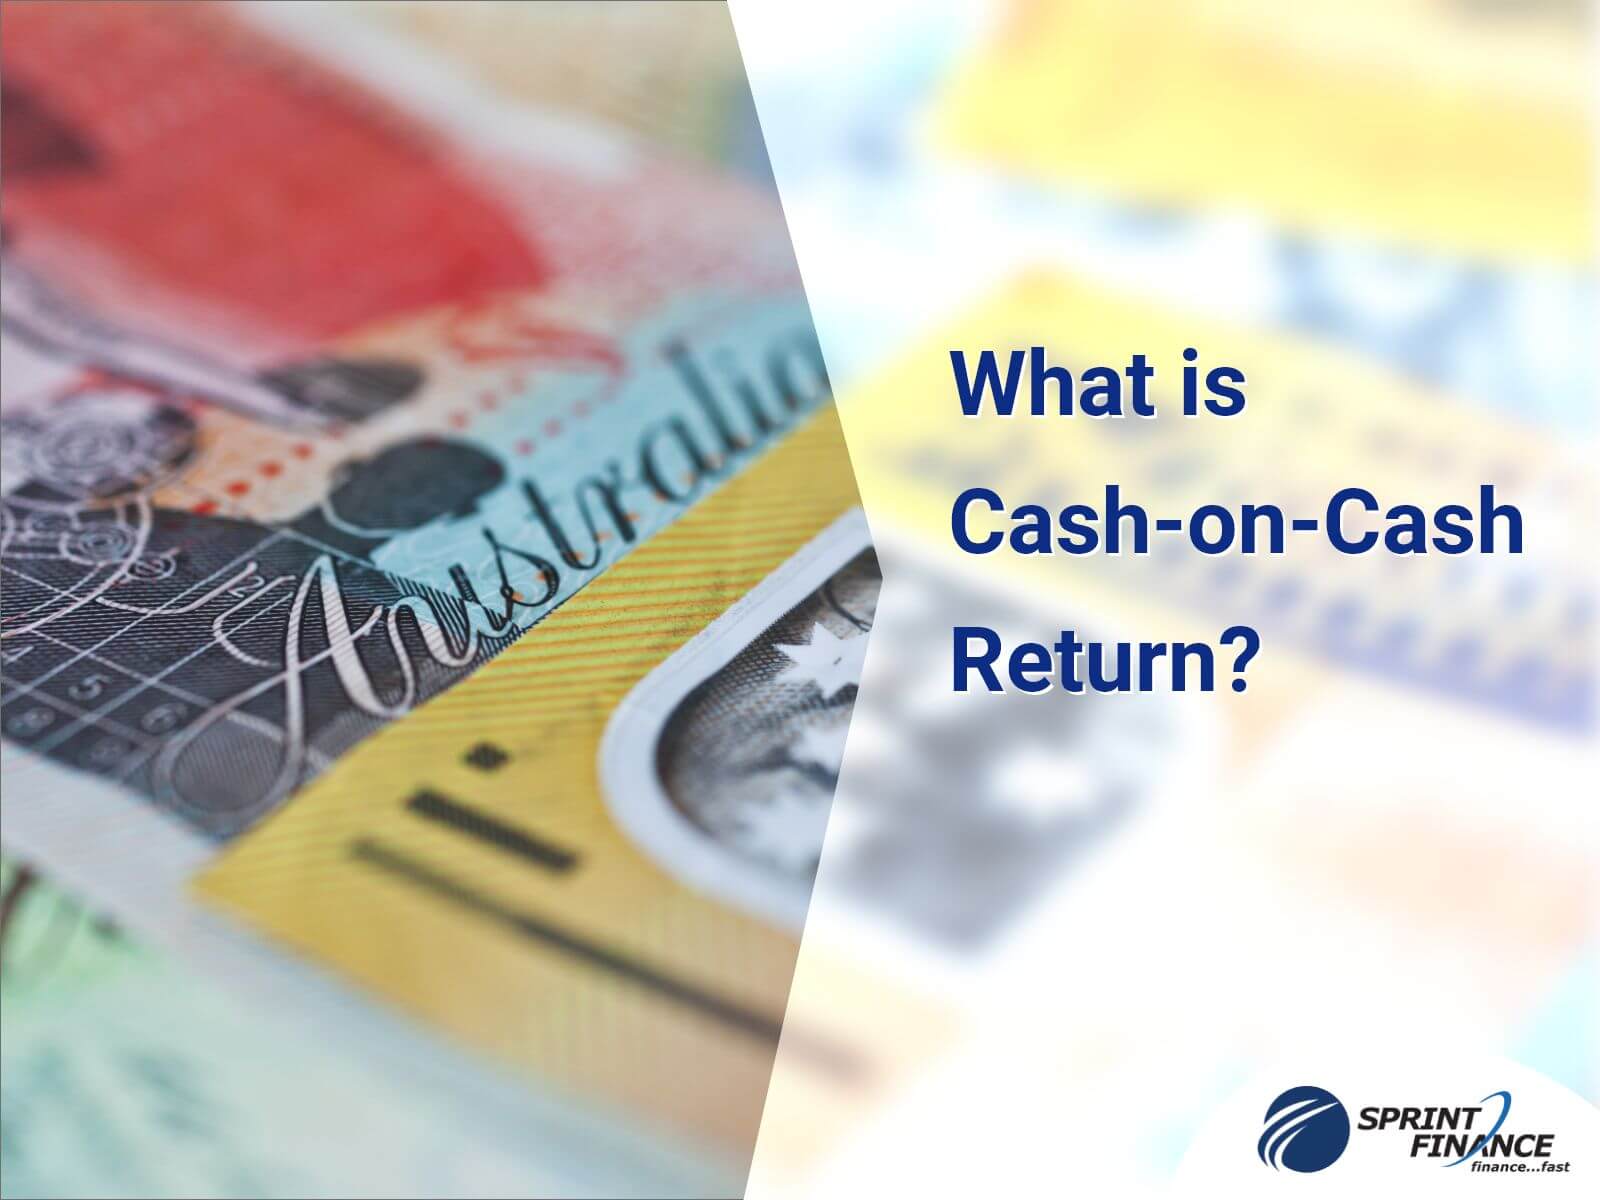 Cash-on-Cash Return Definition